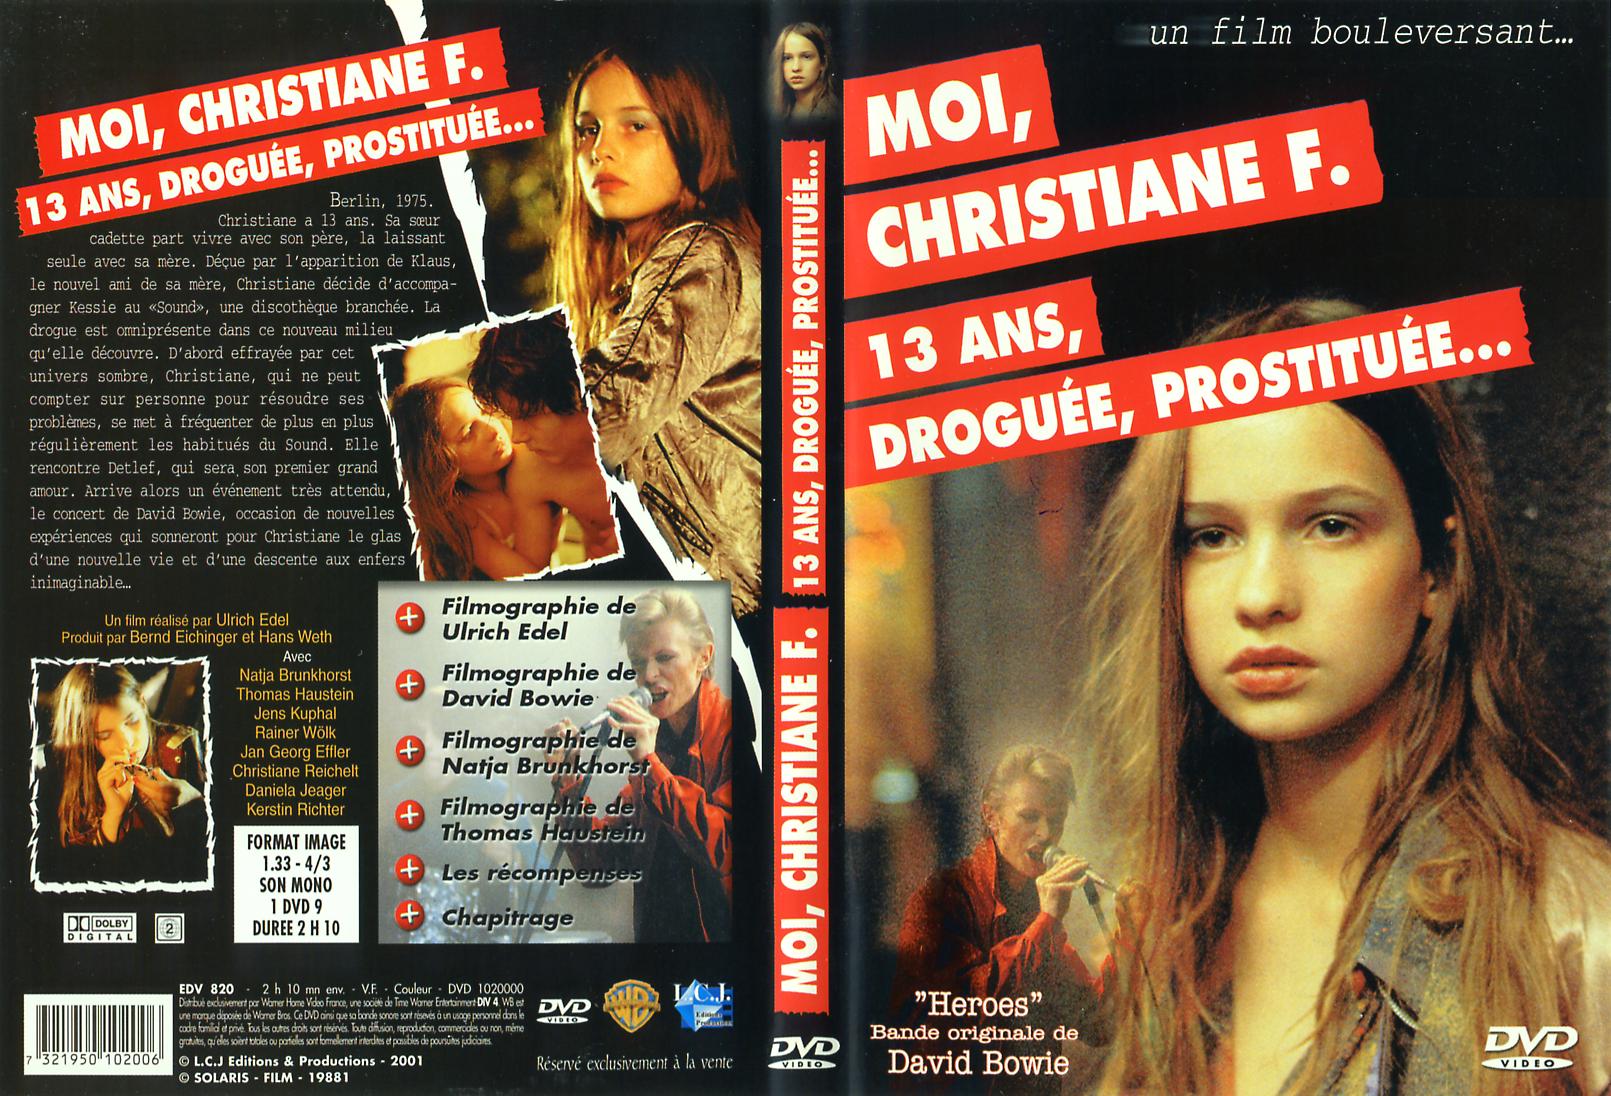 Jaquette DVD Moi Christianne F